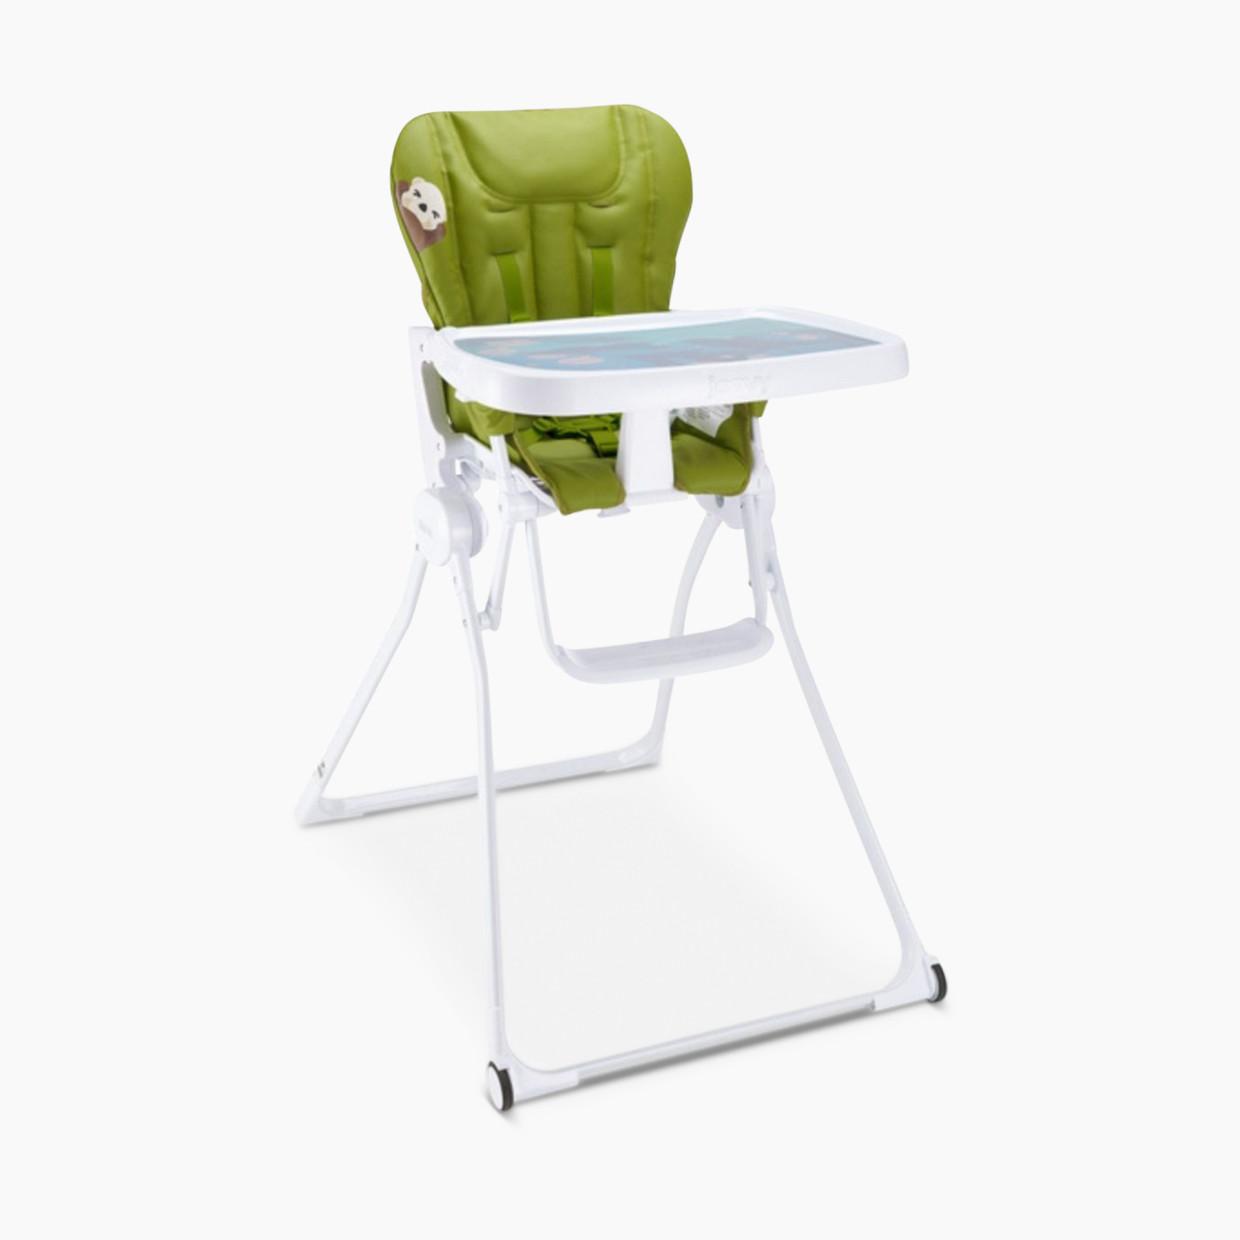 Joovy Nook Newborn High Chair - Greenamole.